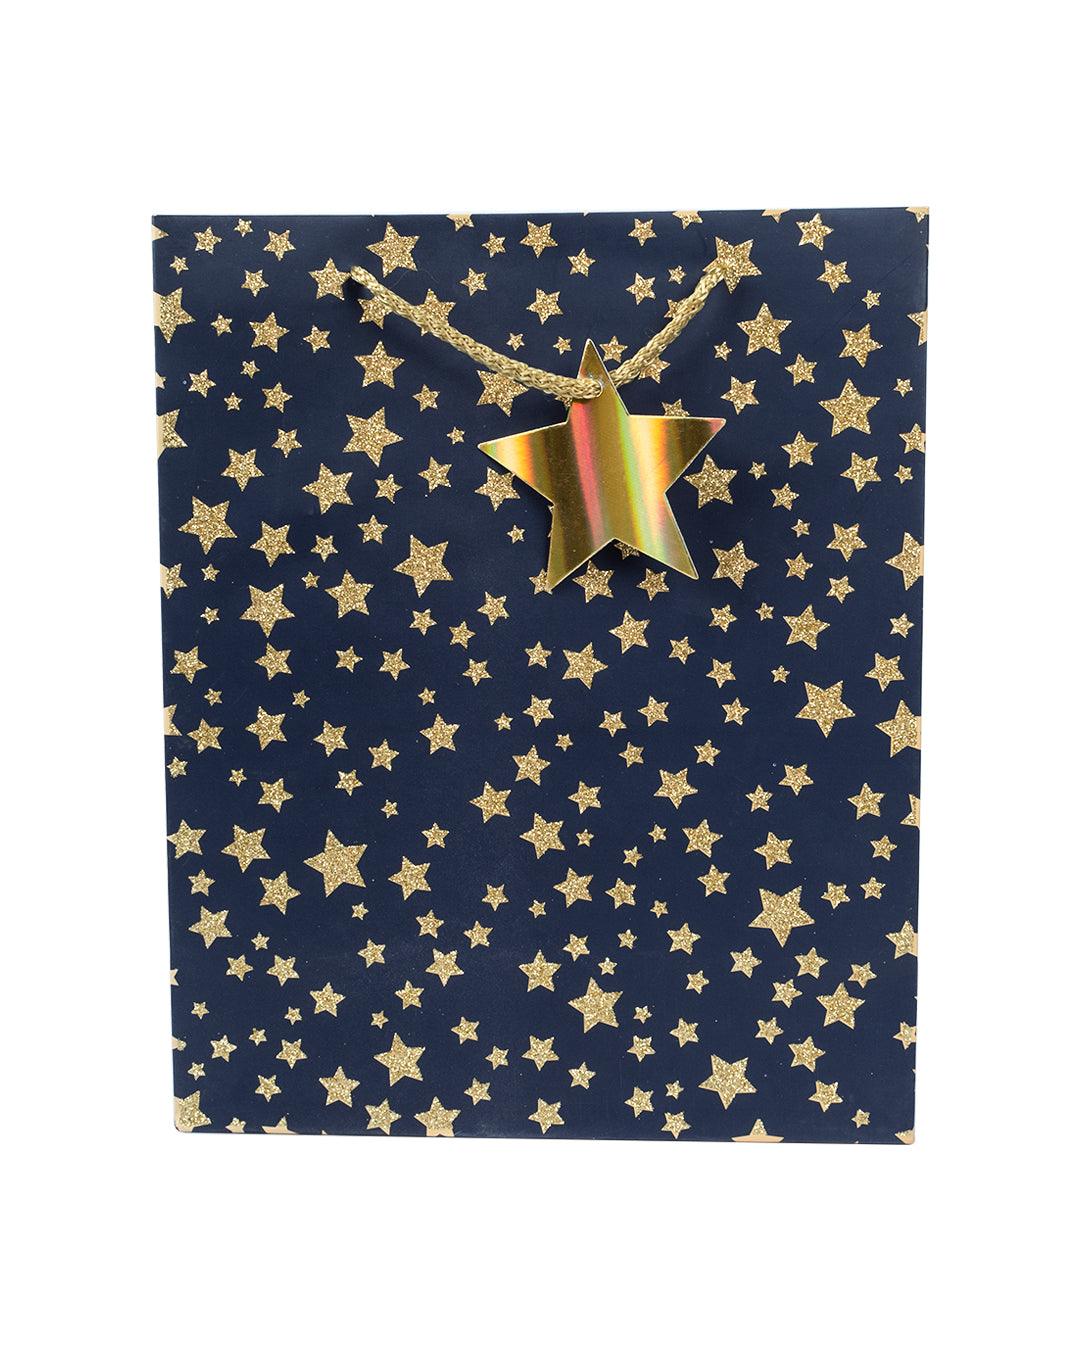 Starry Gift Bag, Medium, Navy Blue, Paper, Set of 3 - MARKET 99